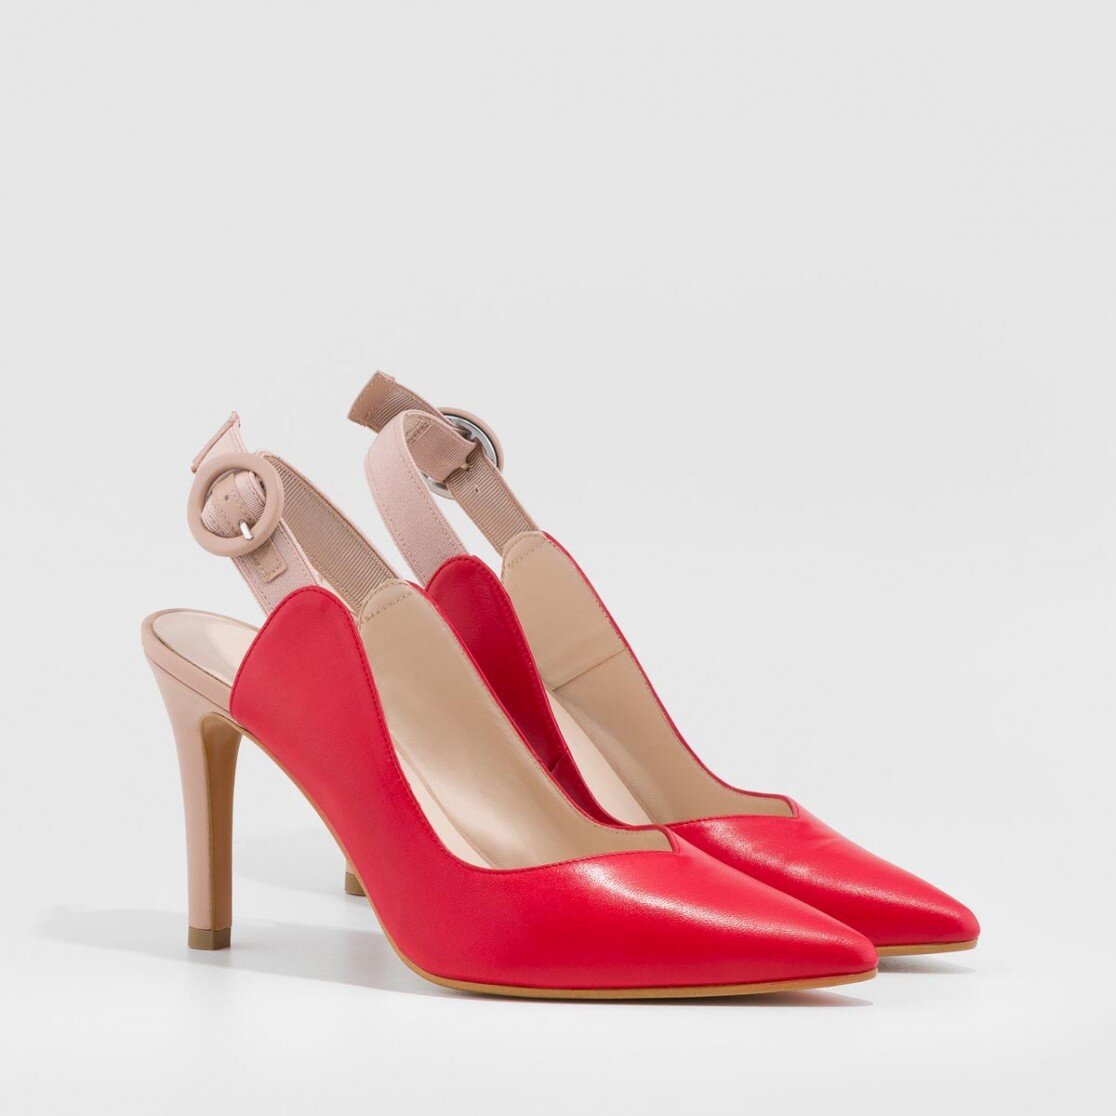 red back heels